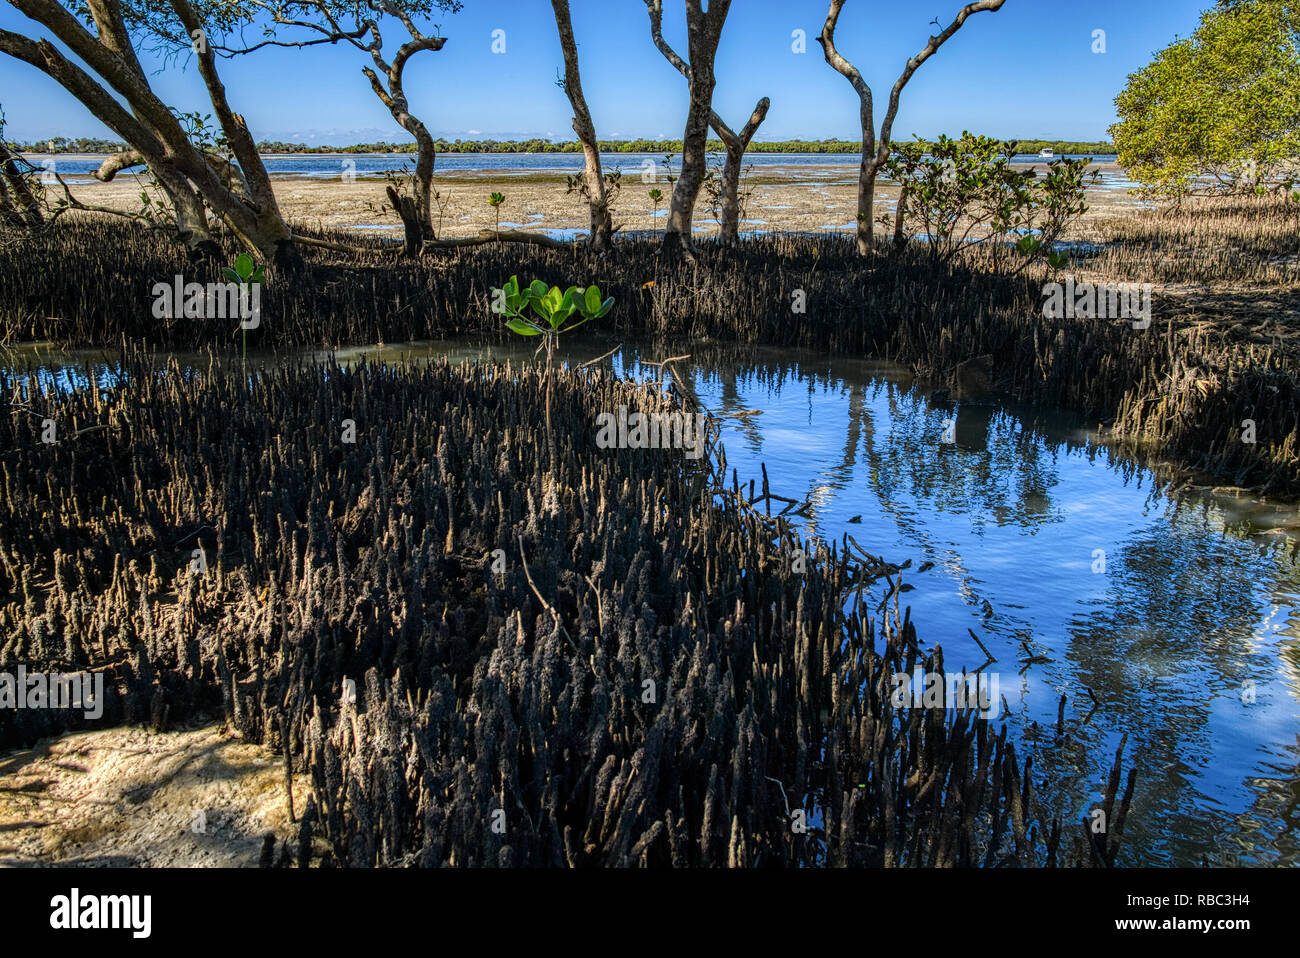 Young mangrove tree shoots on the beach Queensland coastline Australia Stock Photo